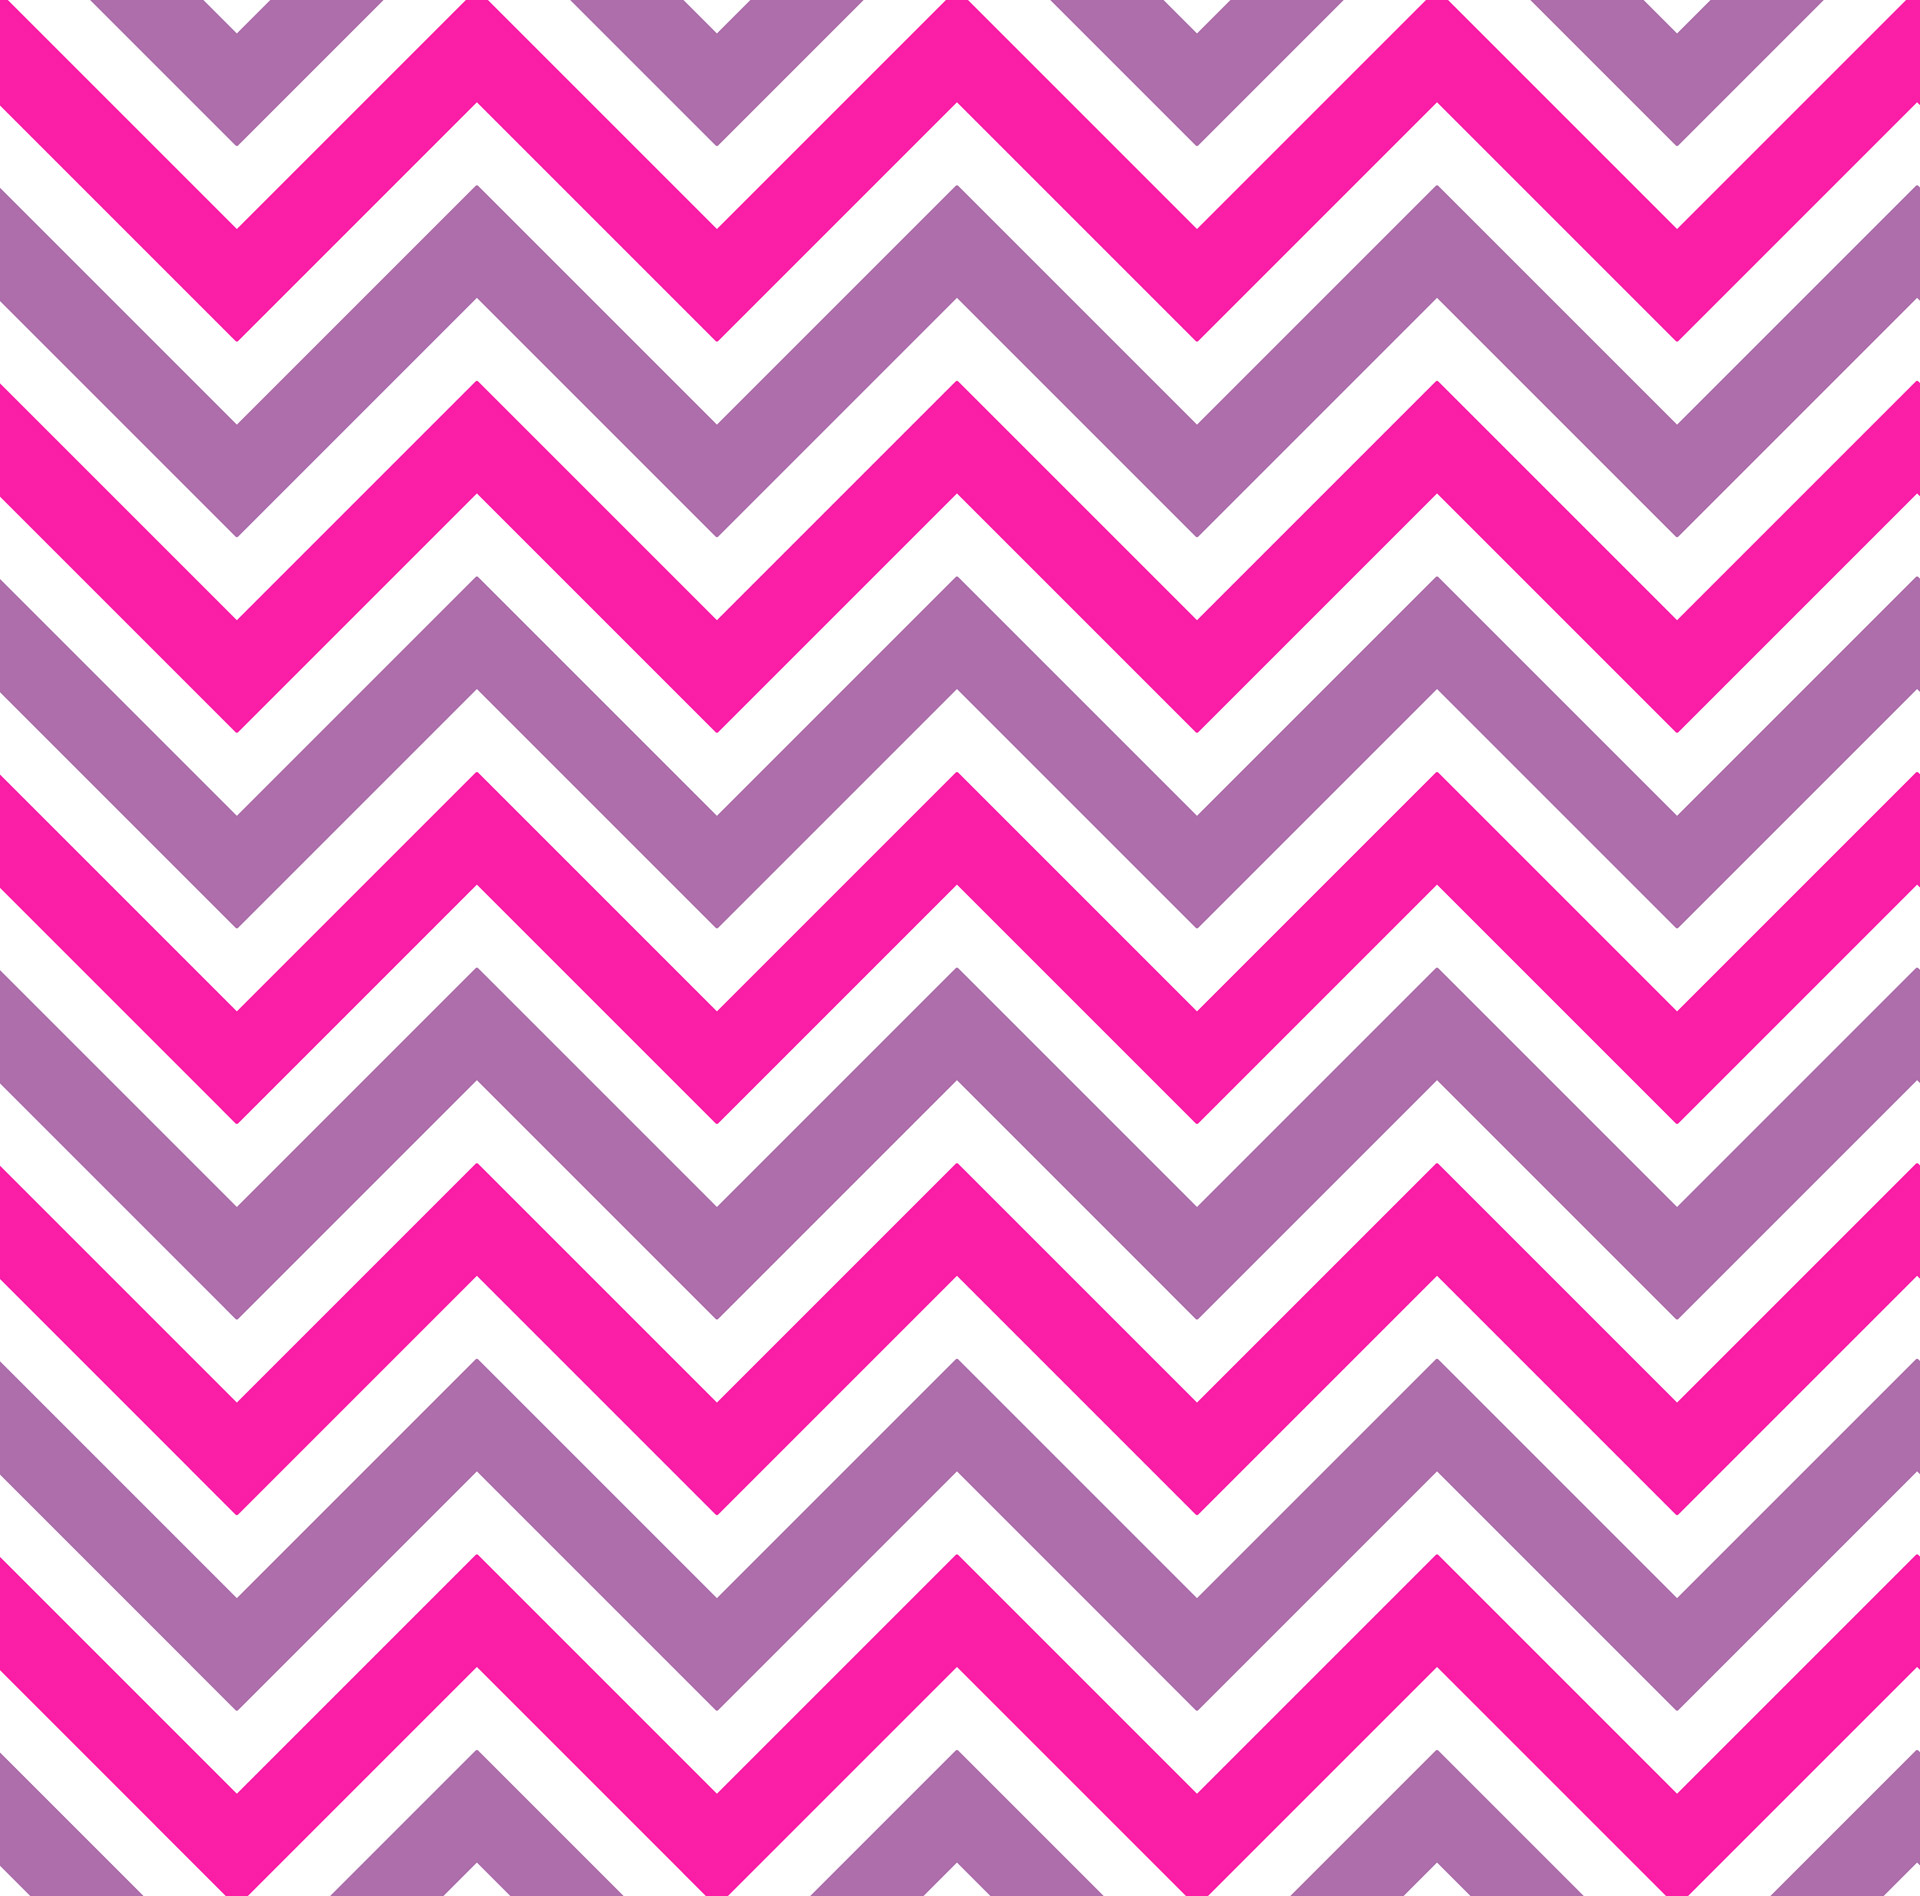 Chevrons Stripes Pink Background